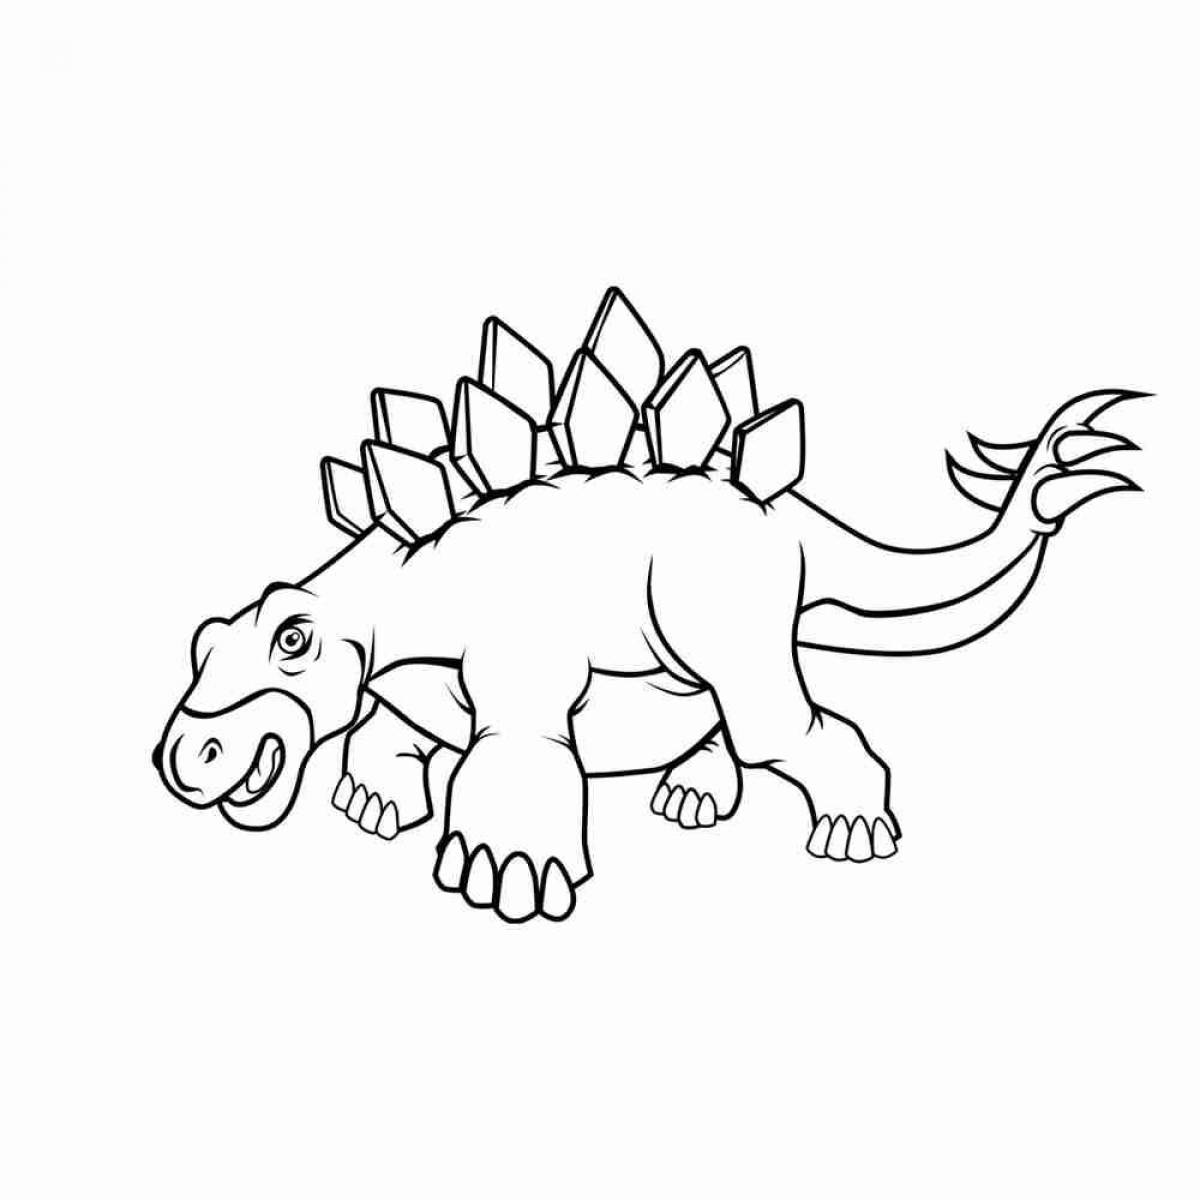 Stegosaurus dynamic coloring page